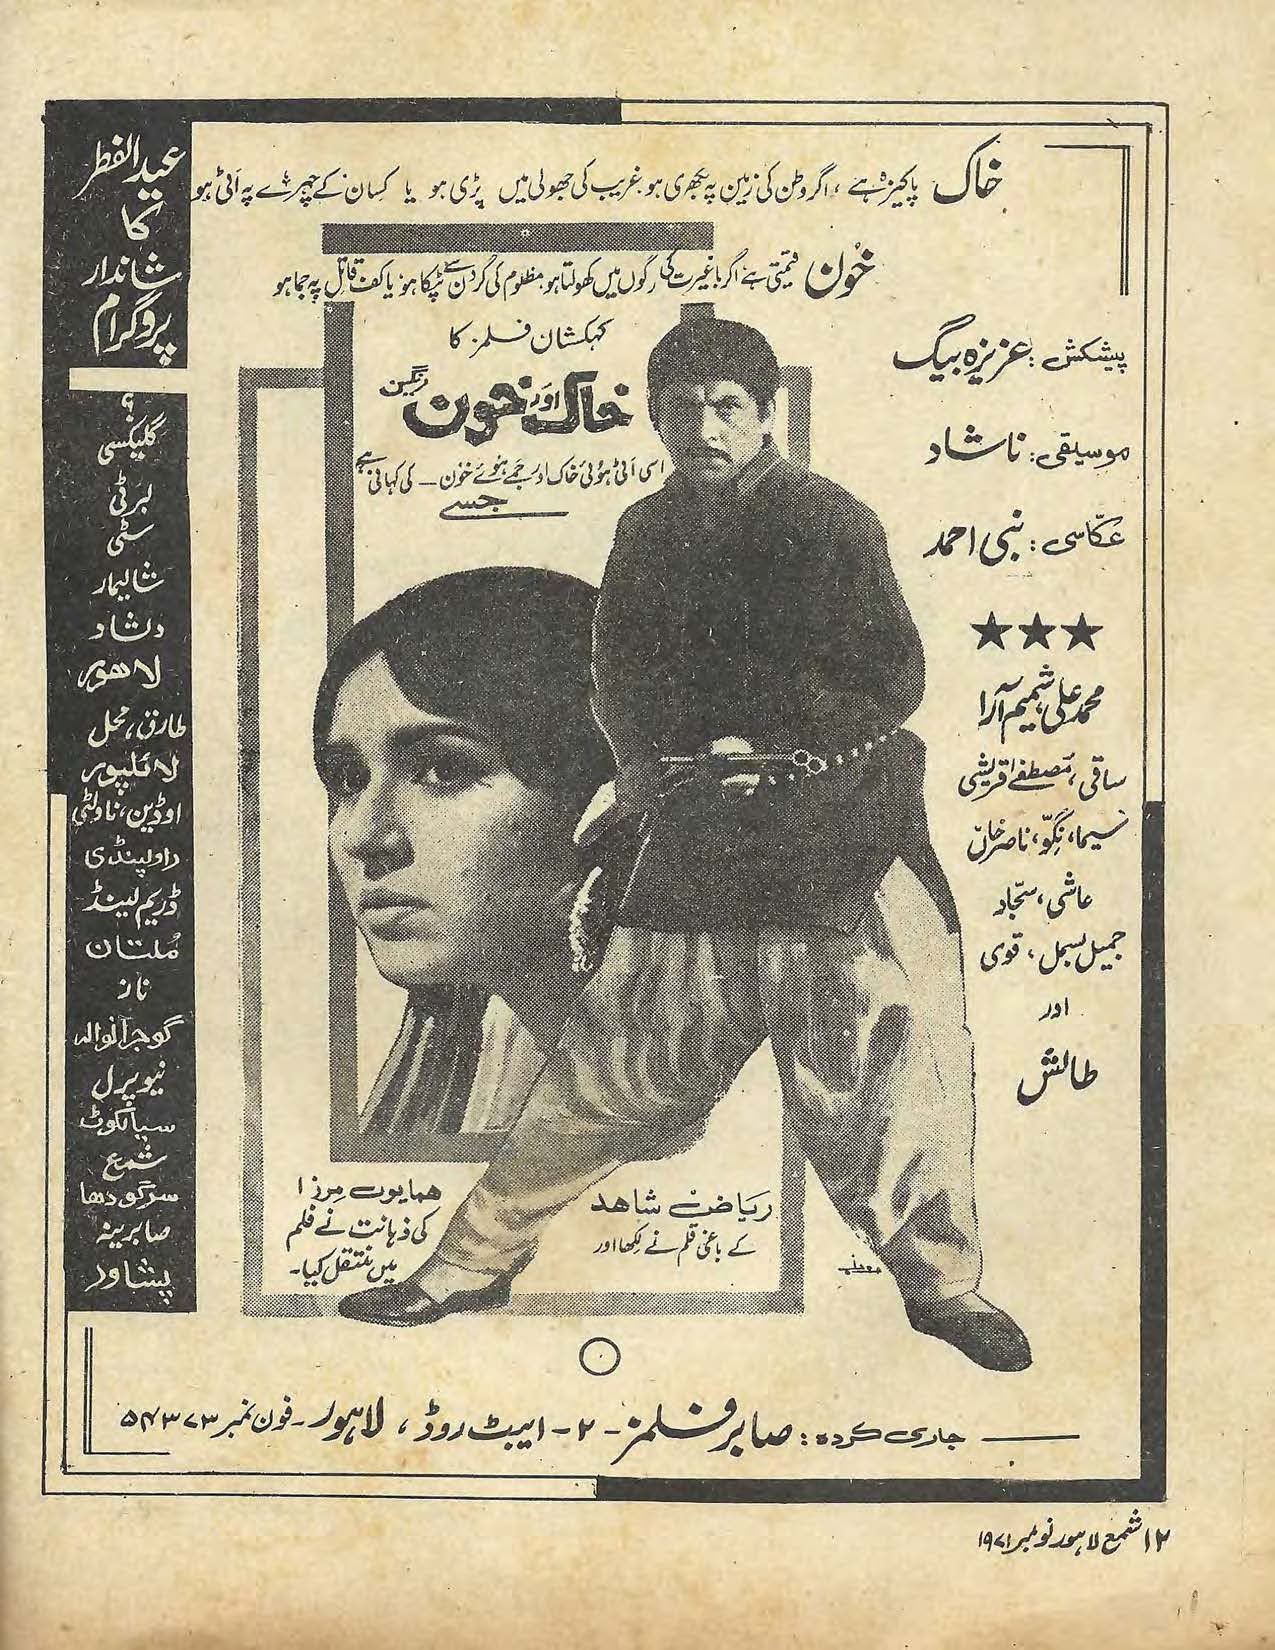 Shama (Nov, 1971)